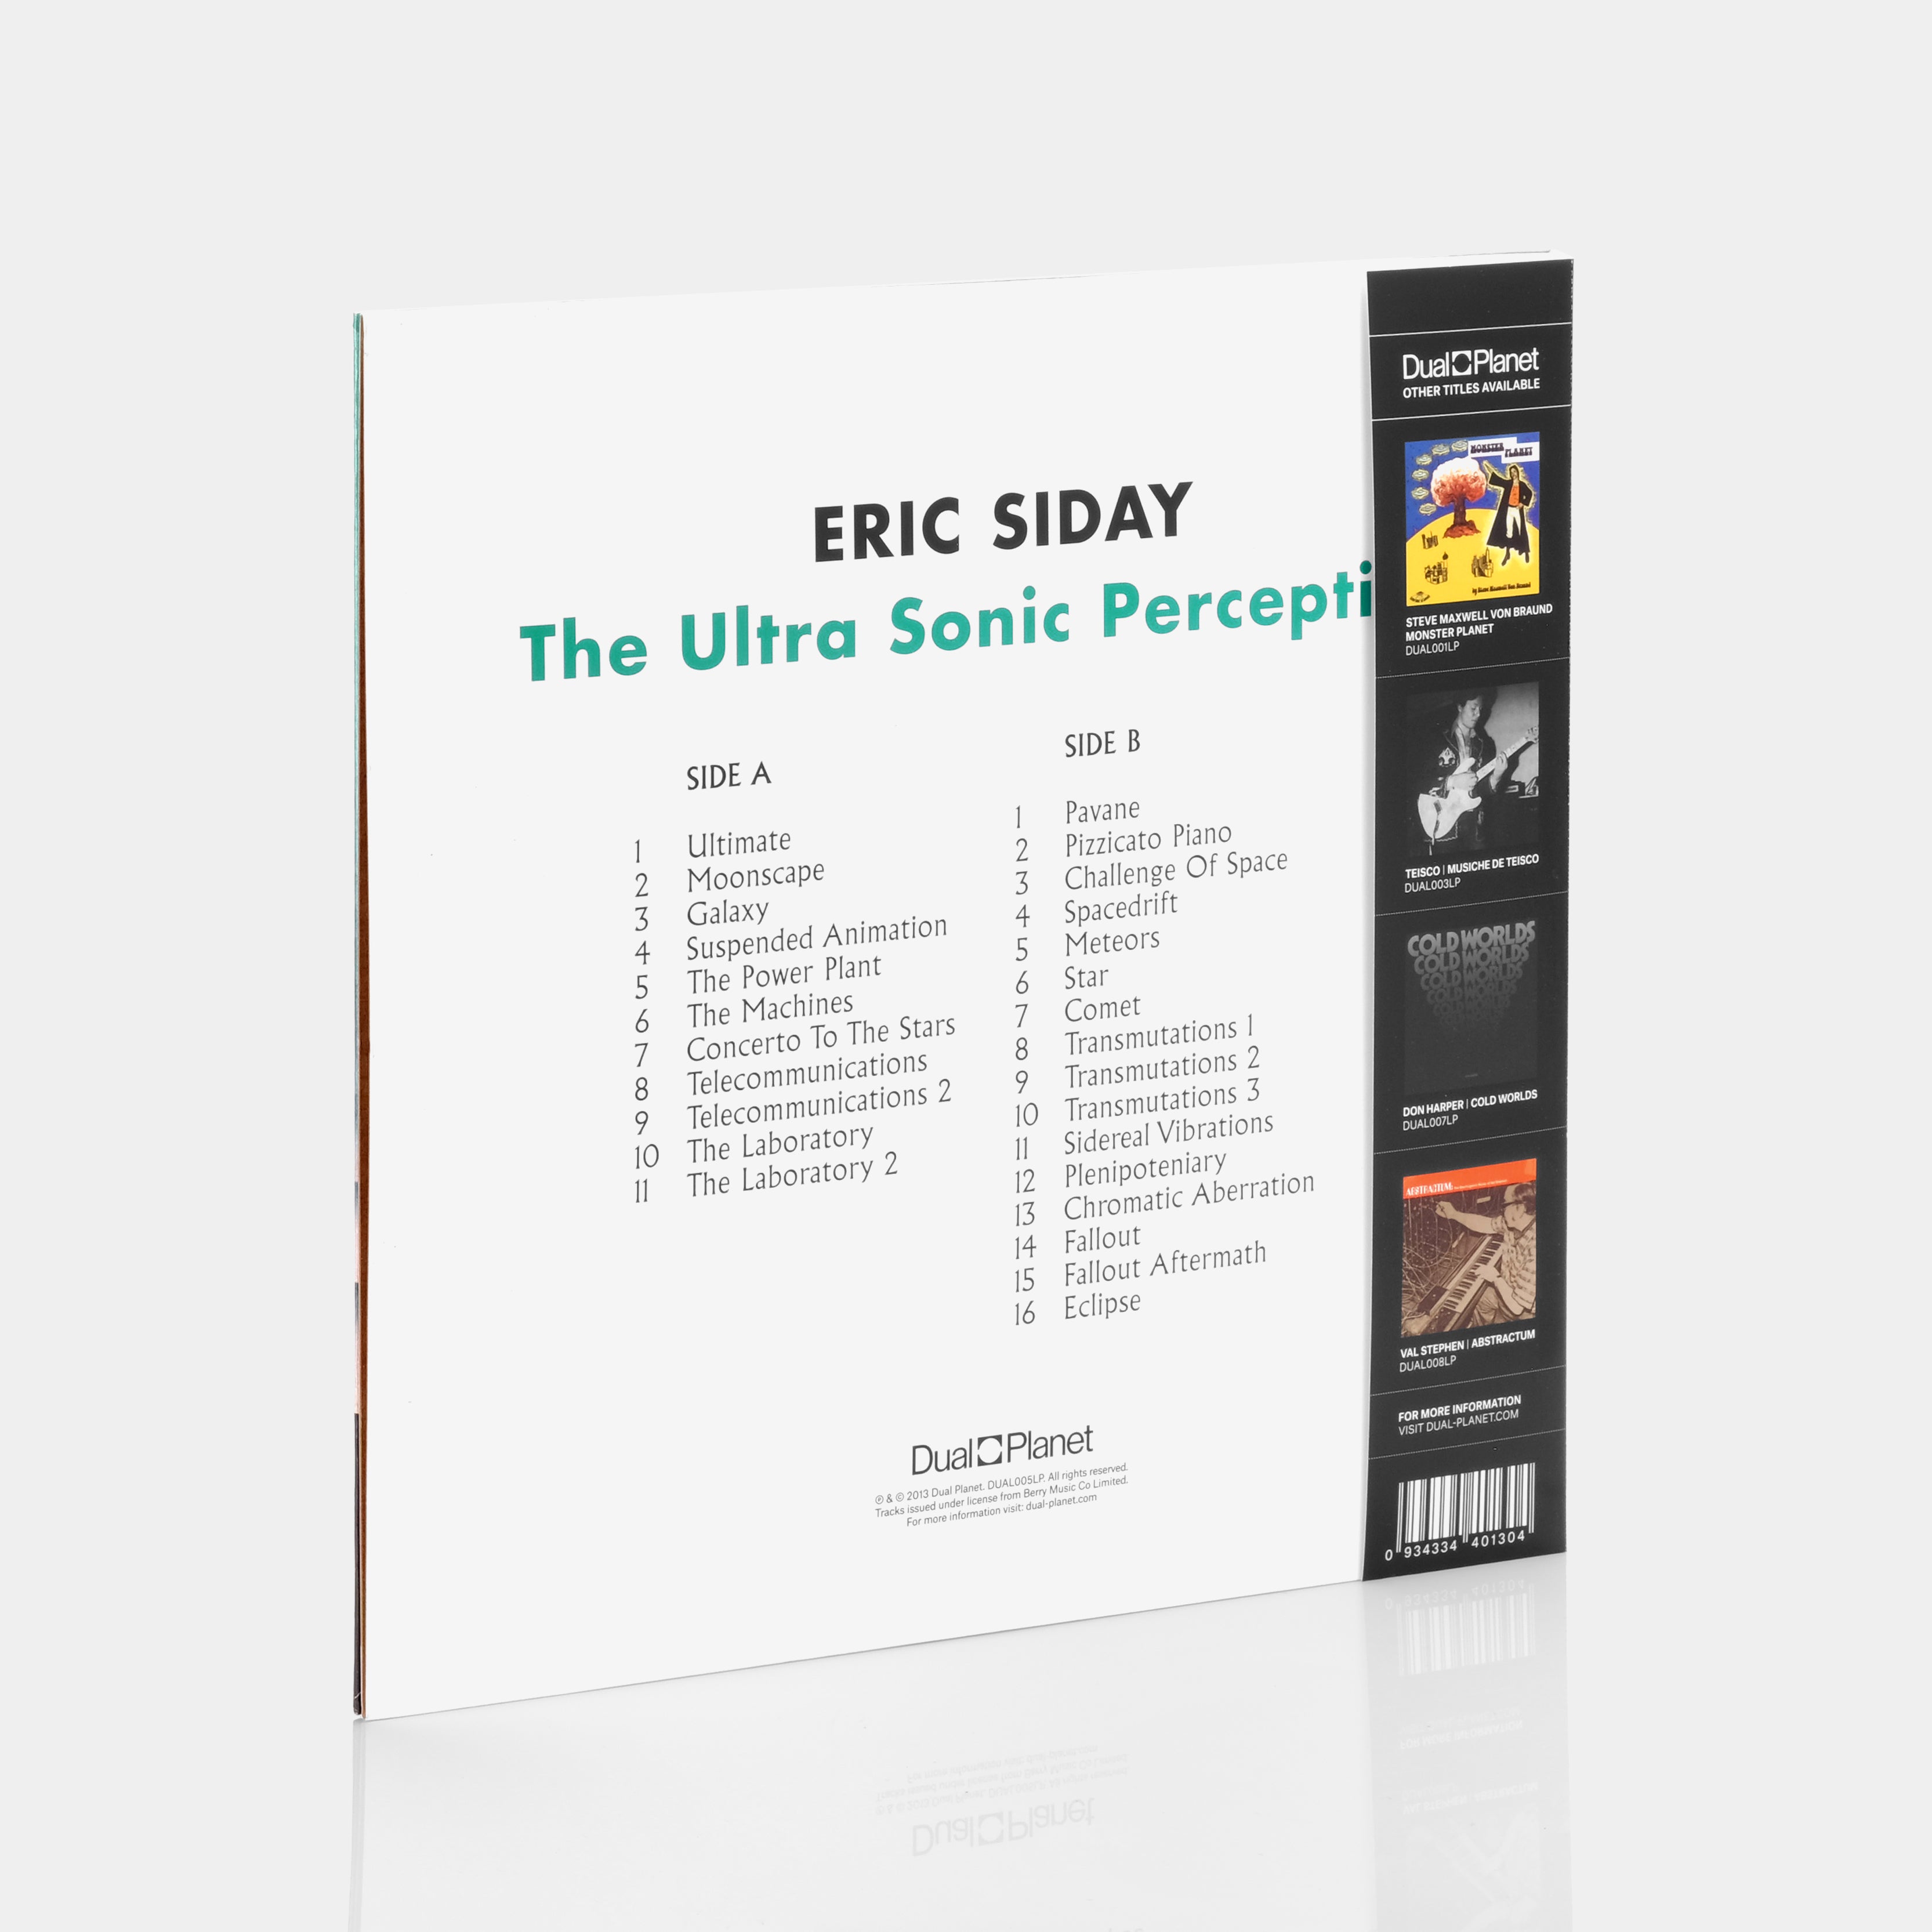 Eric Siday - The Ultra Sonic Perception LP Vinyl Record